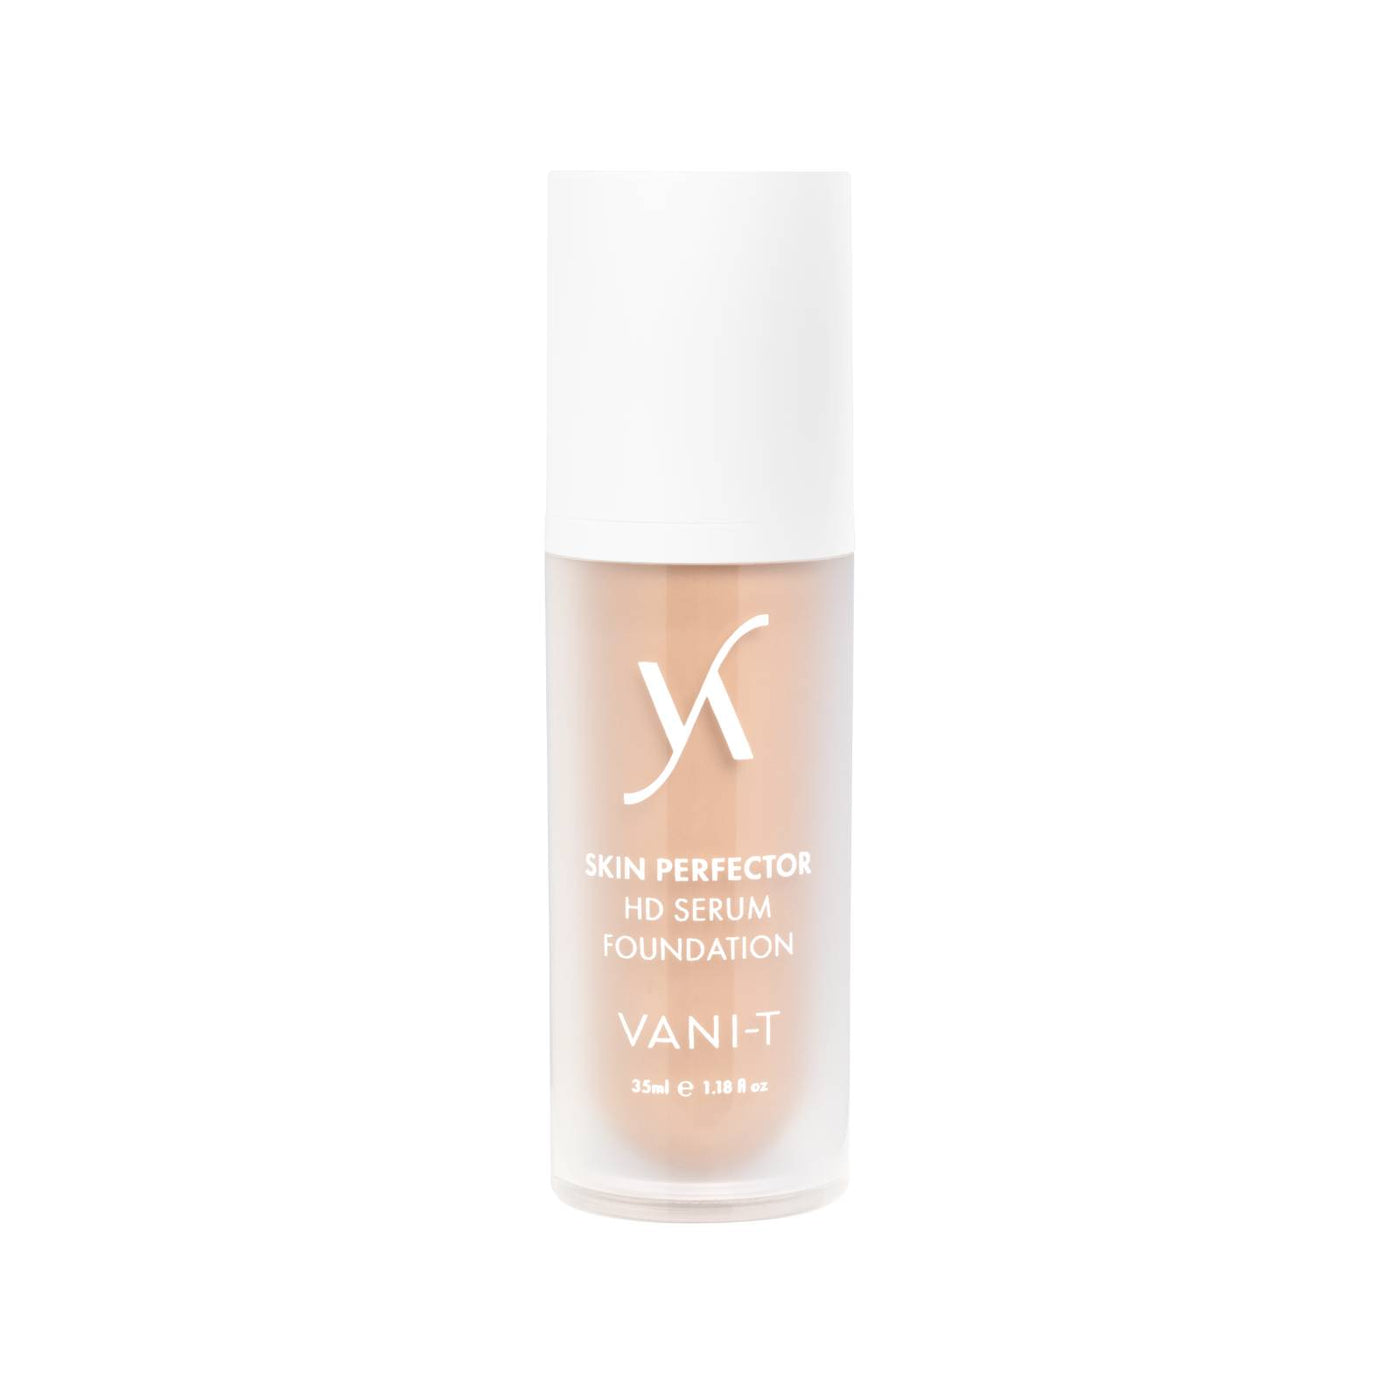 VANI-T Skin Perfector HD Serum Foundation 35ml